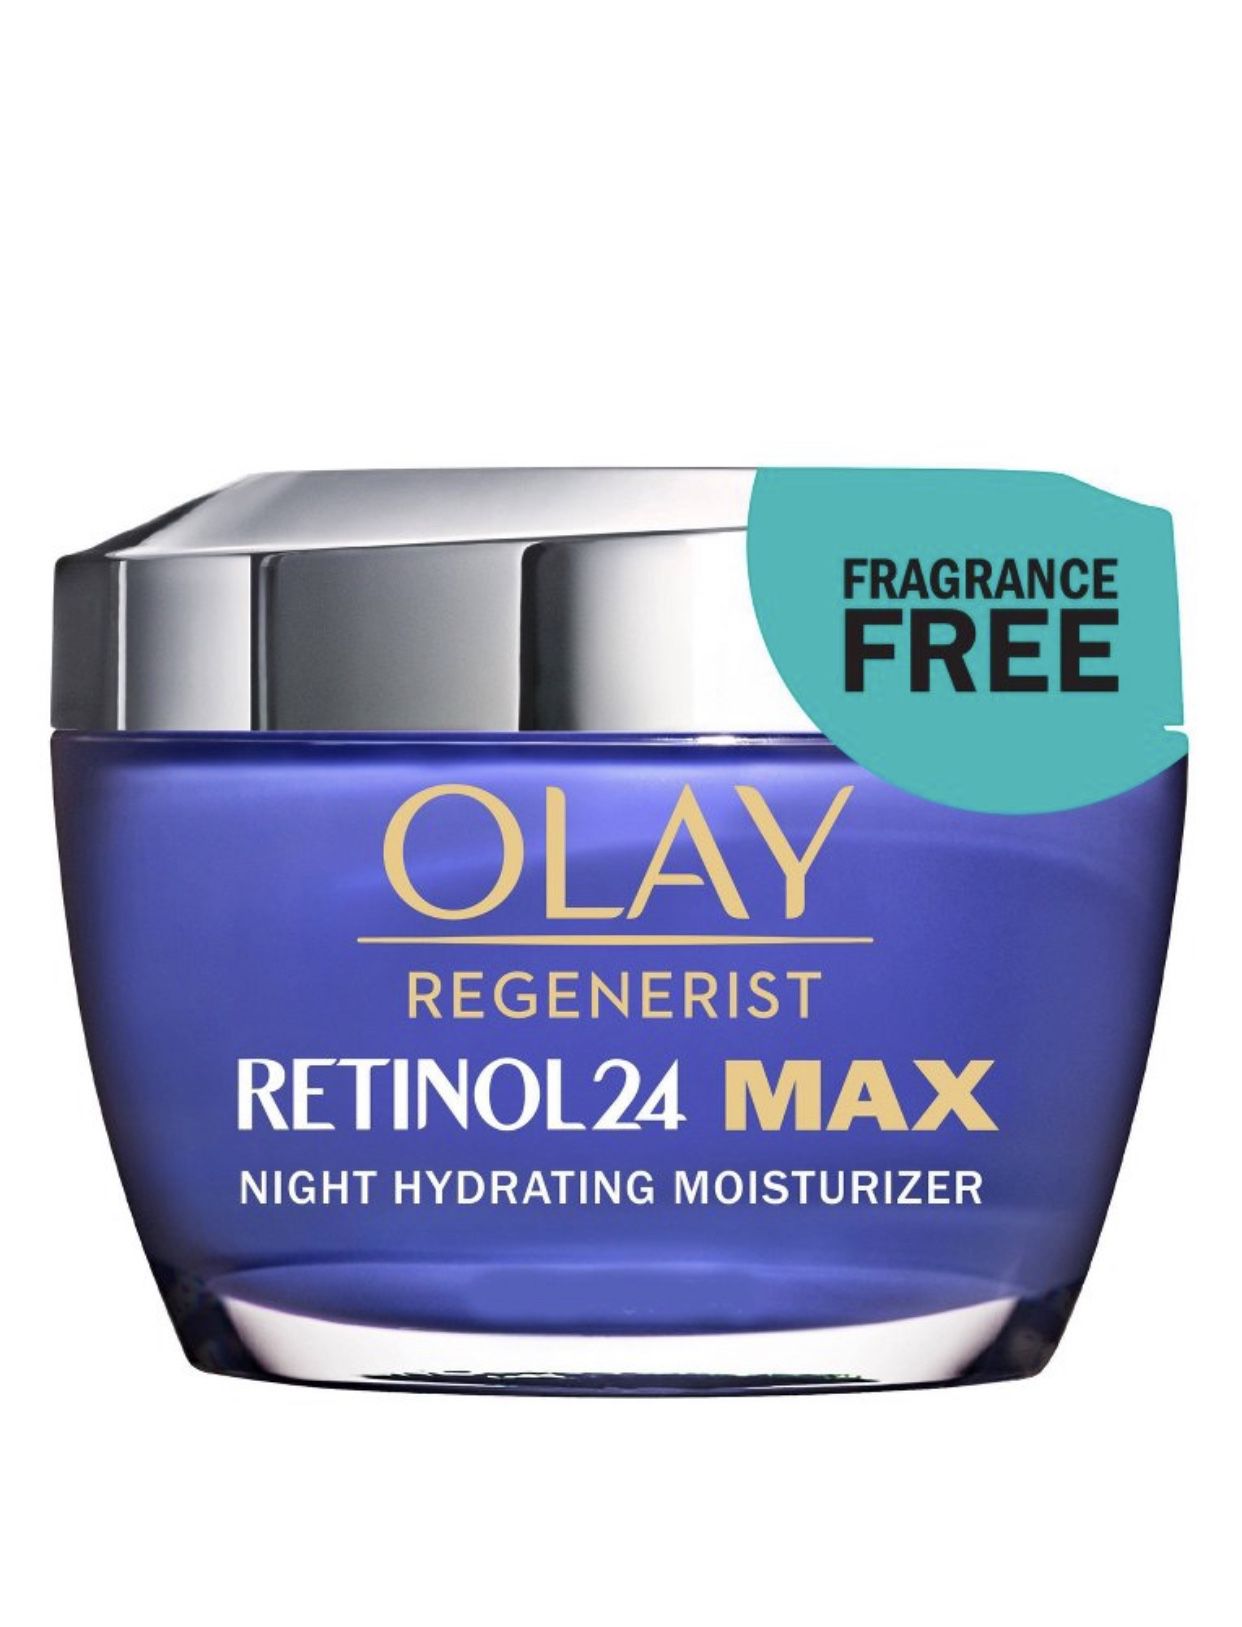 Olay Retinol 24 Max Night Face Moisturizer for Dull Skin Fragrance-Free - 1.7oz